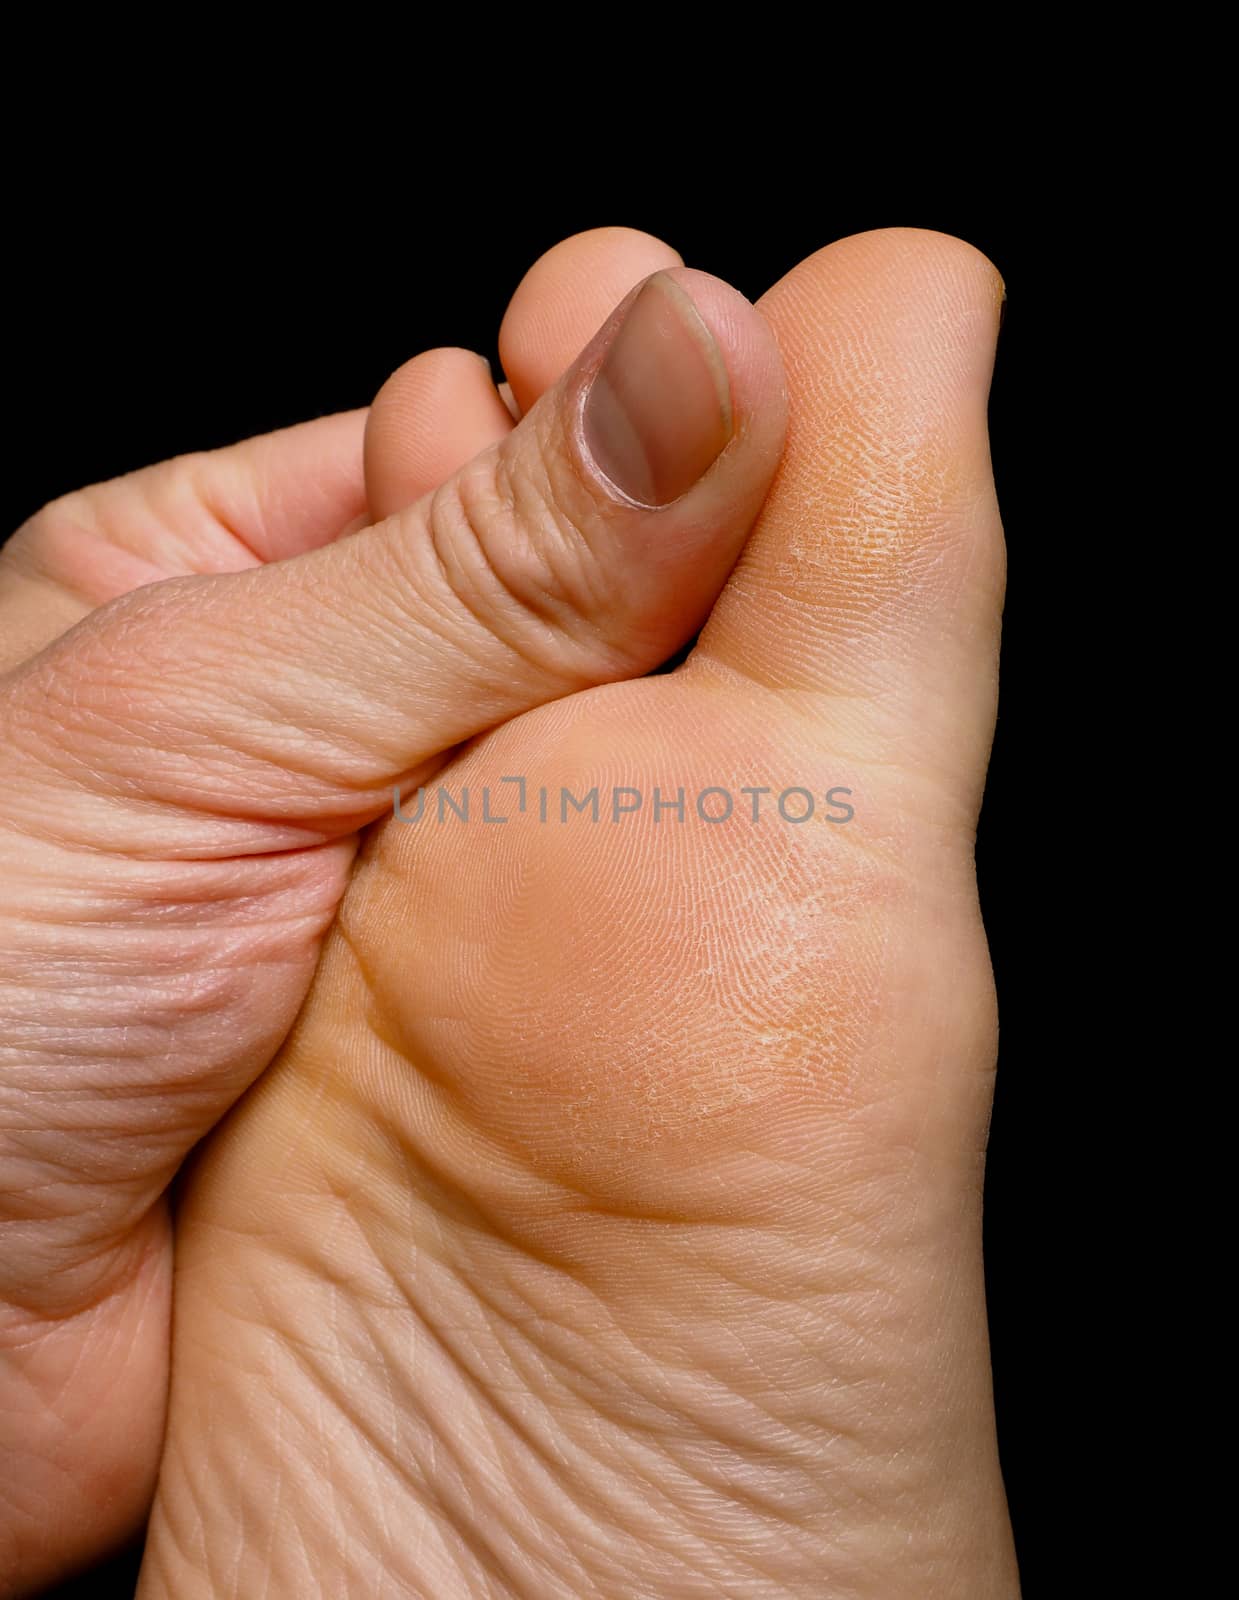 Thumb pressure on big toe massage on dry skin isolated towards b by Arvebettum